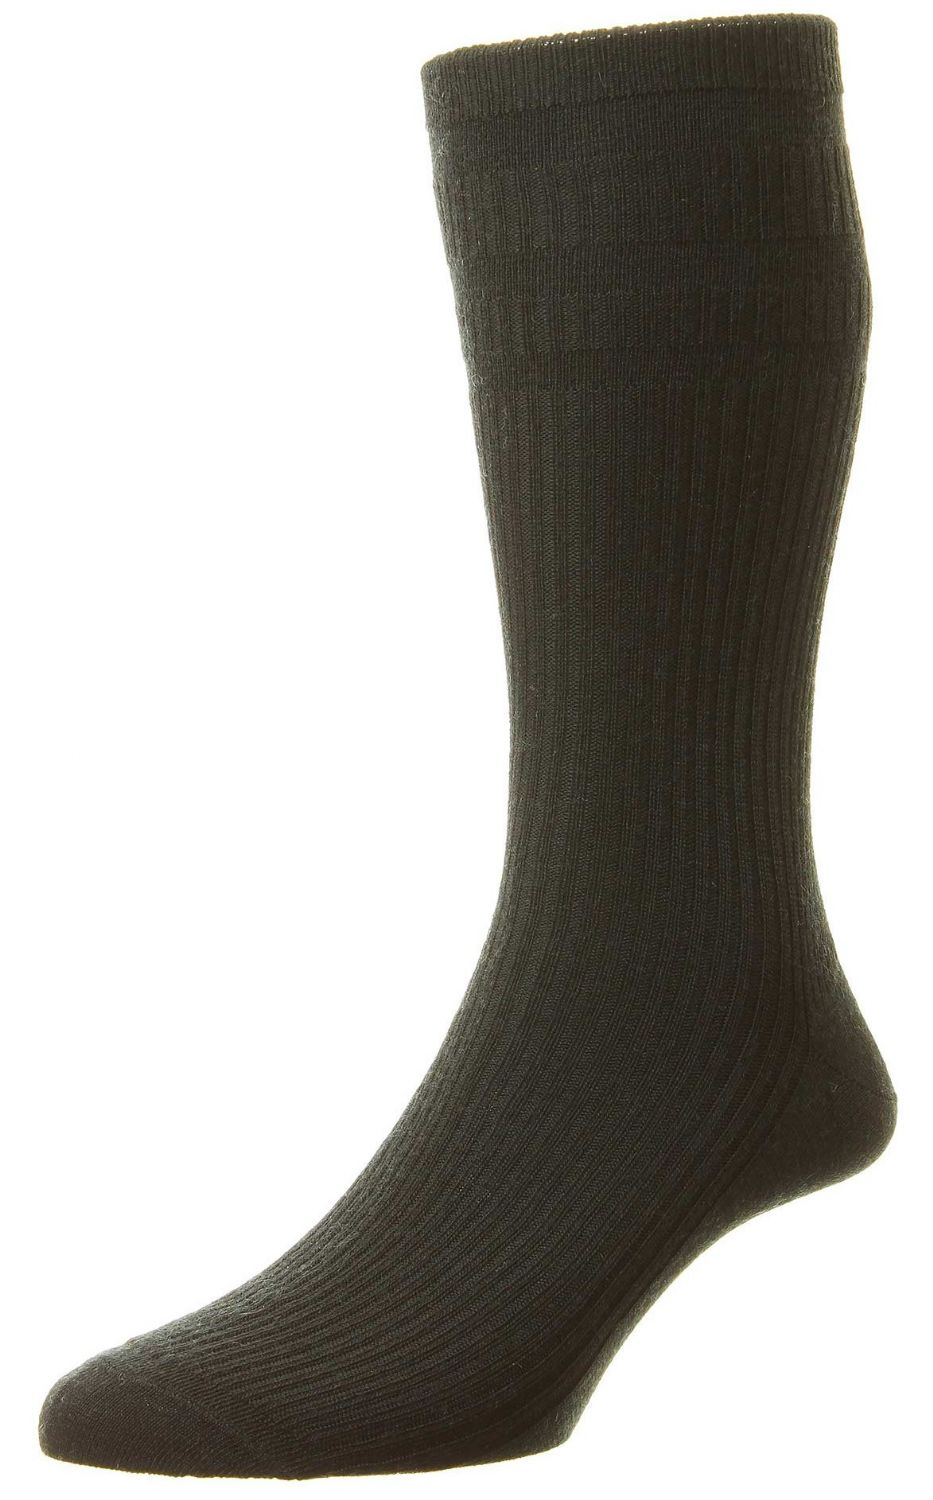 HJ Socks HJ190 Black Shoe size 6-11